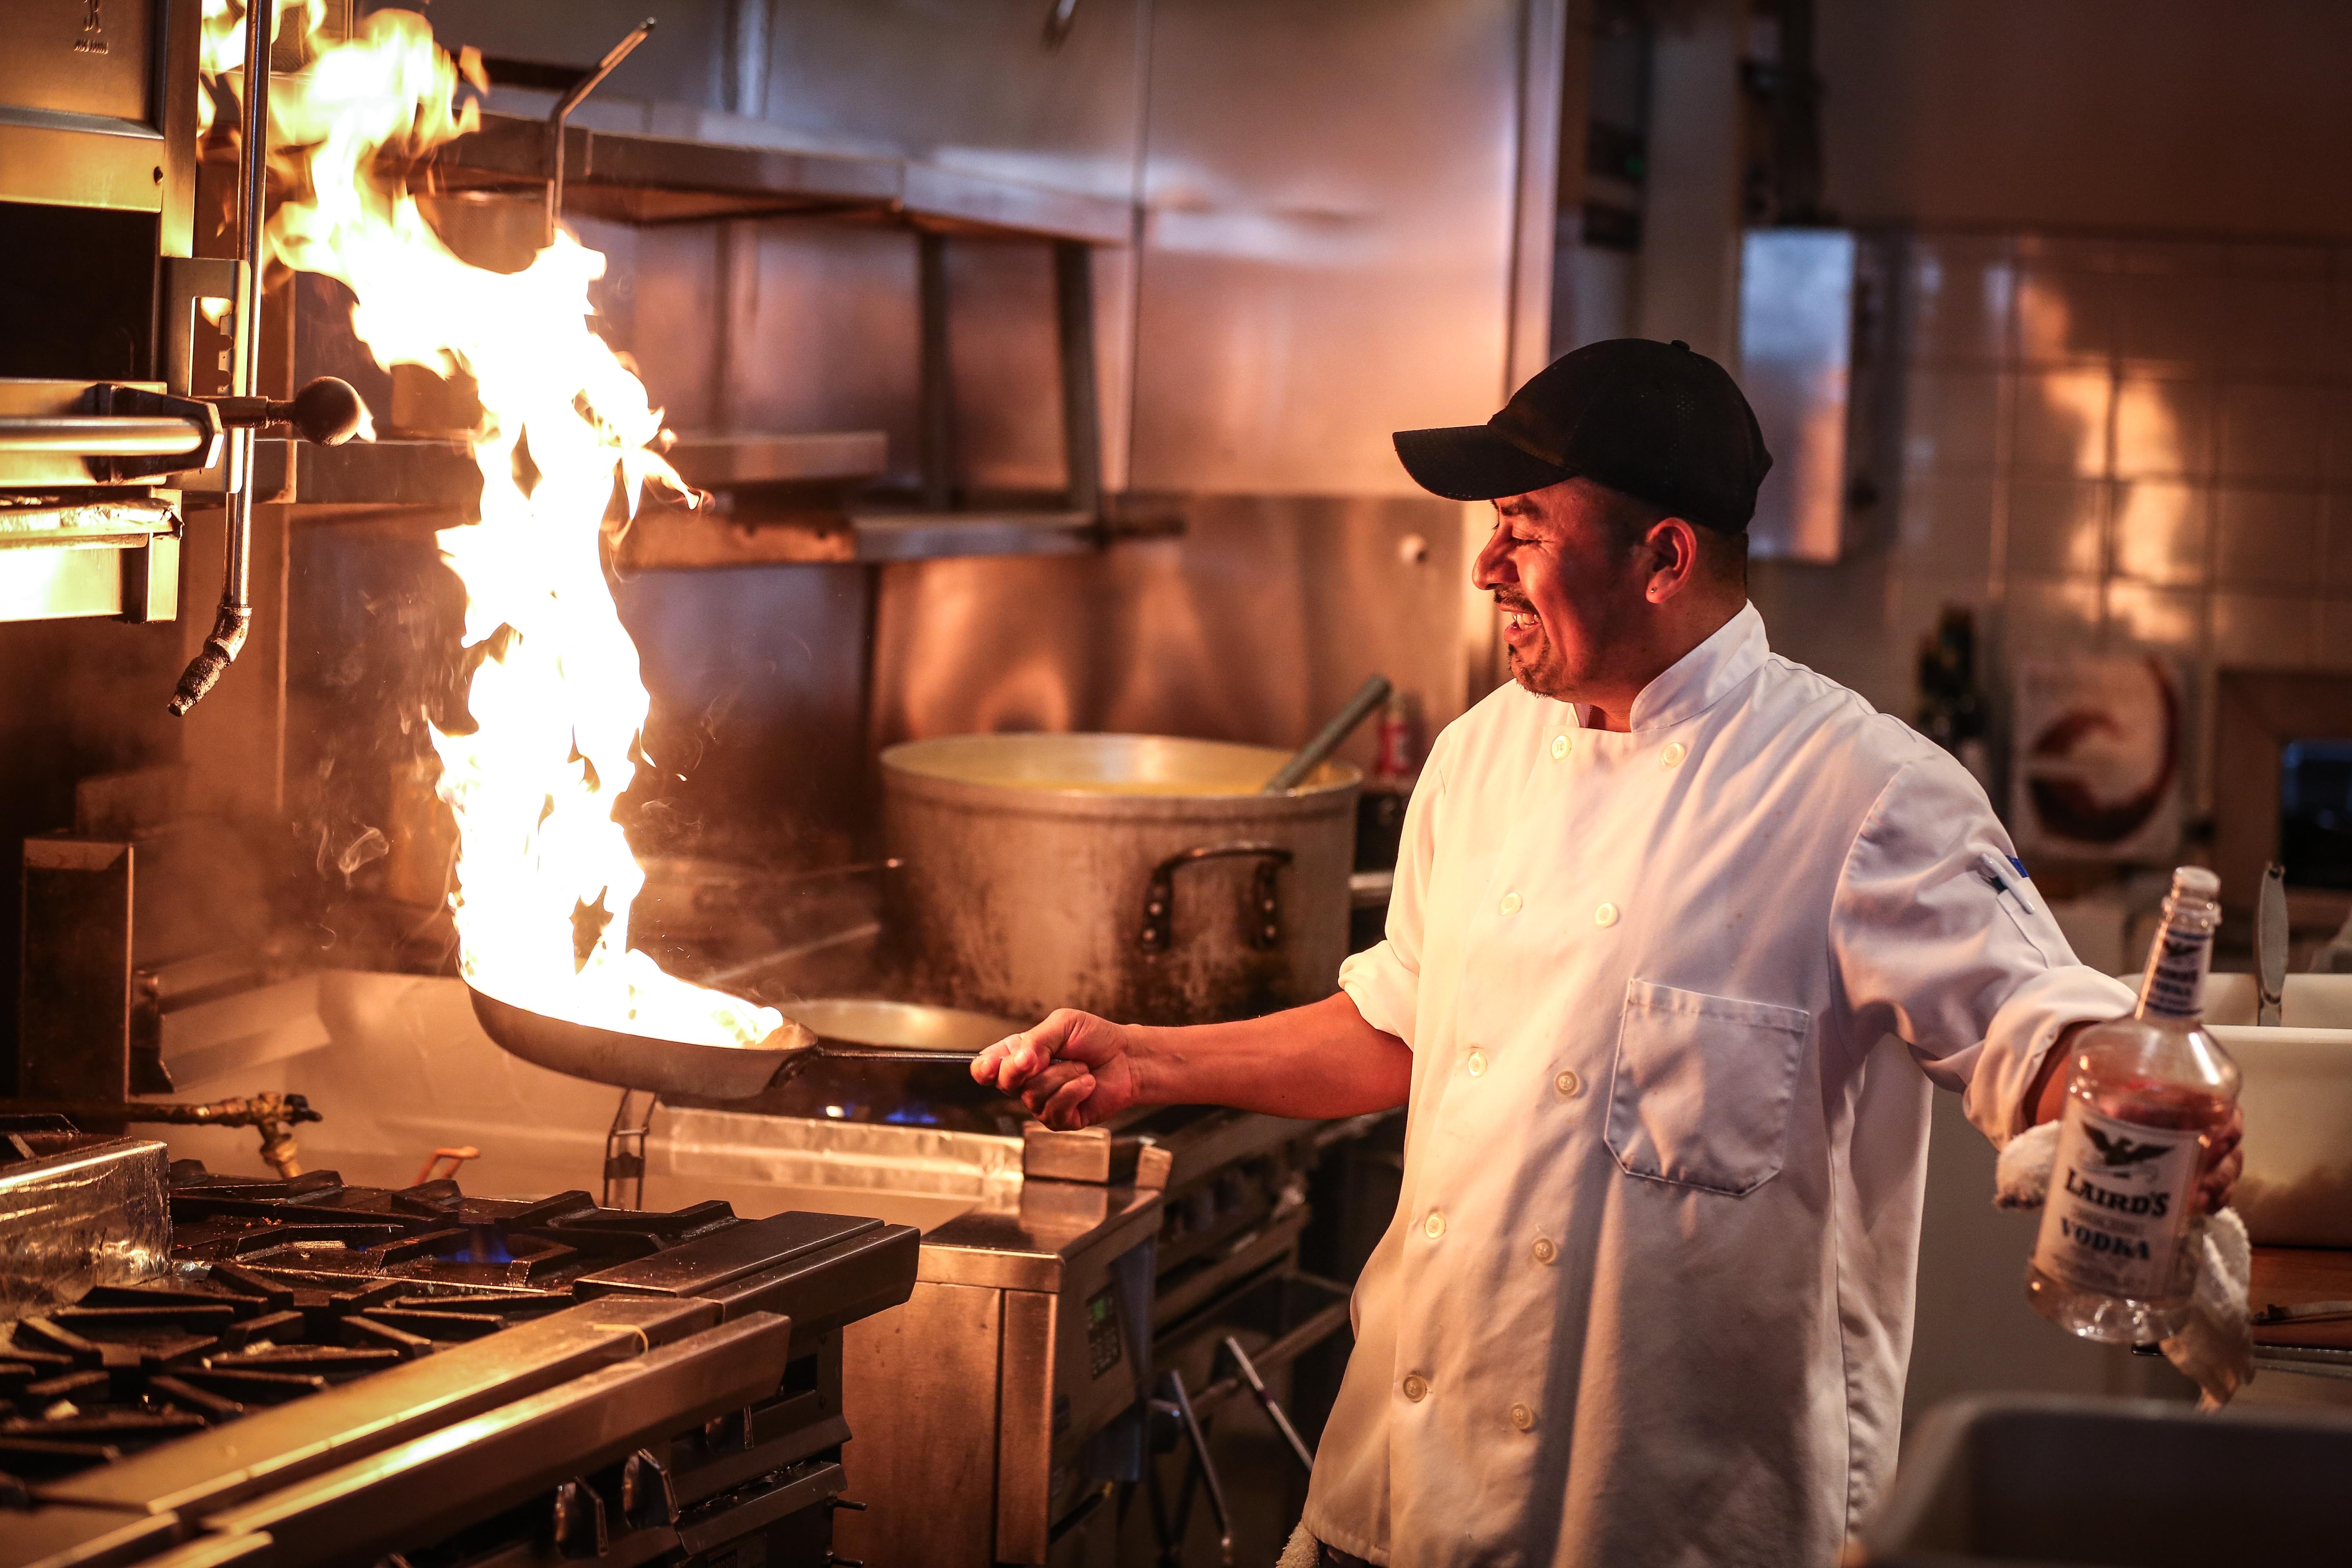 Flambé: Why Do Chefs Set Fire to Stuff?, by Rosie Alderson, PhD, Science  Soufflé